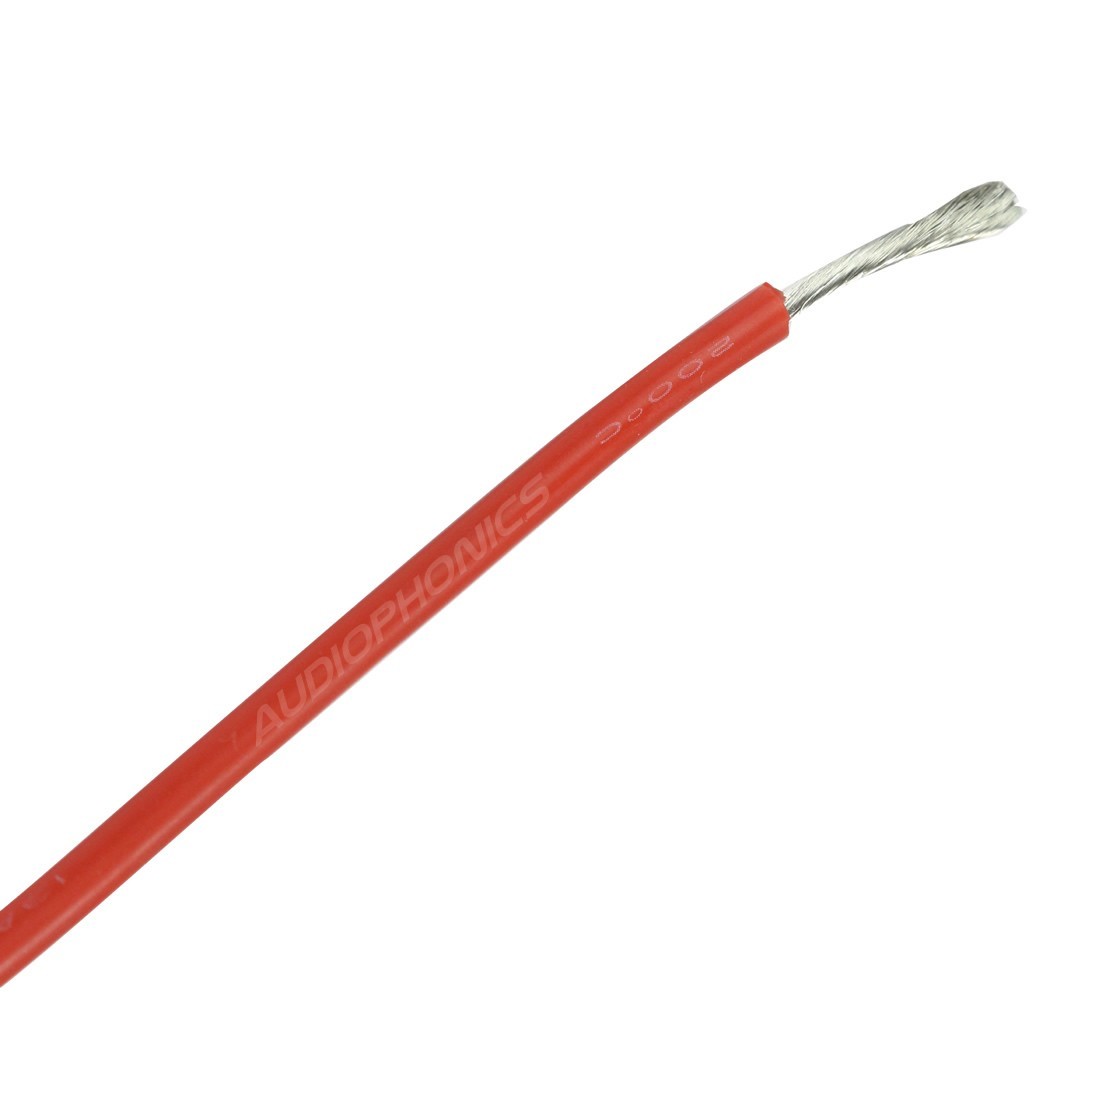 Fil de câblage multibrins silicone 18AWG 0.823mm² (Rouge)